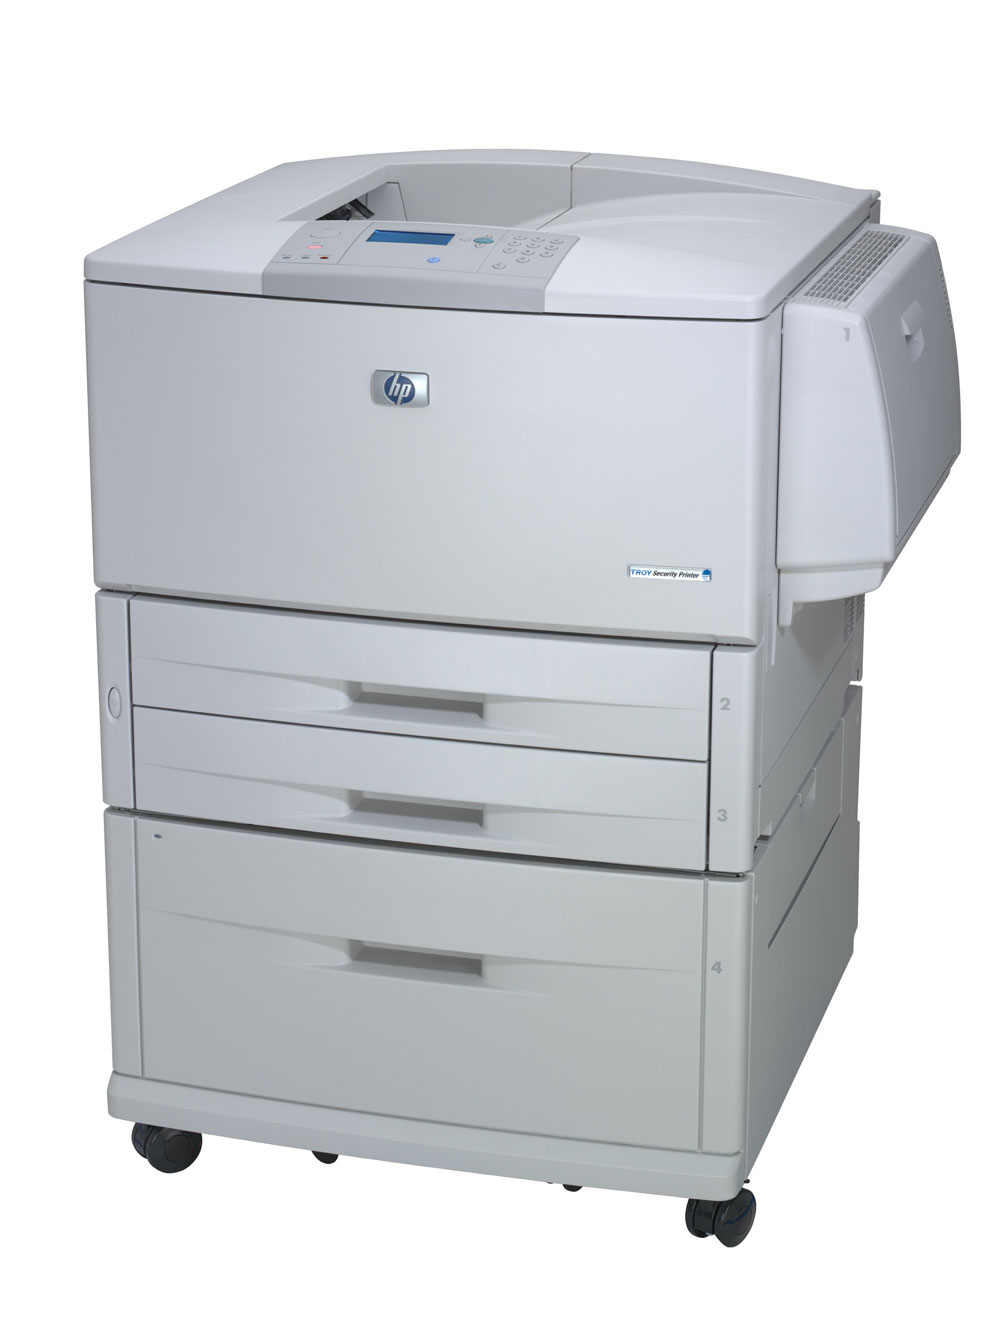 Tiskárna HP LaserJet 9050